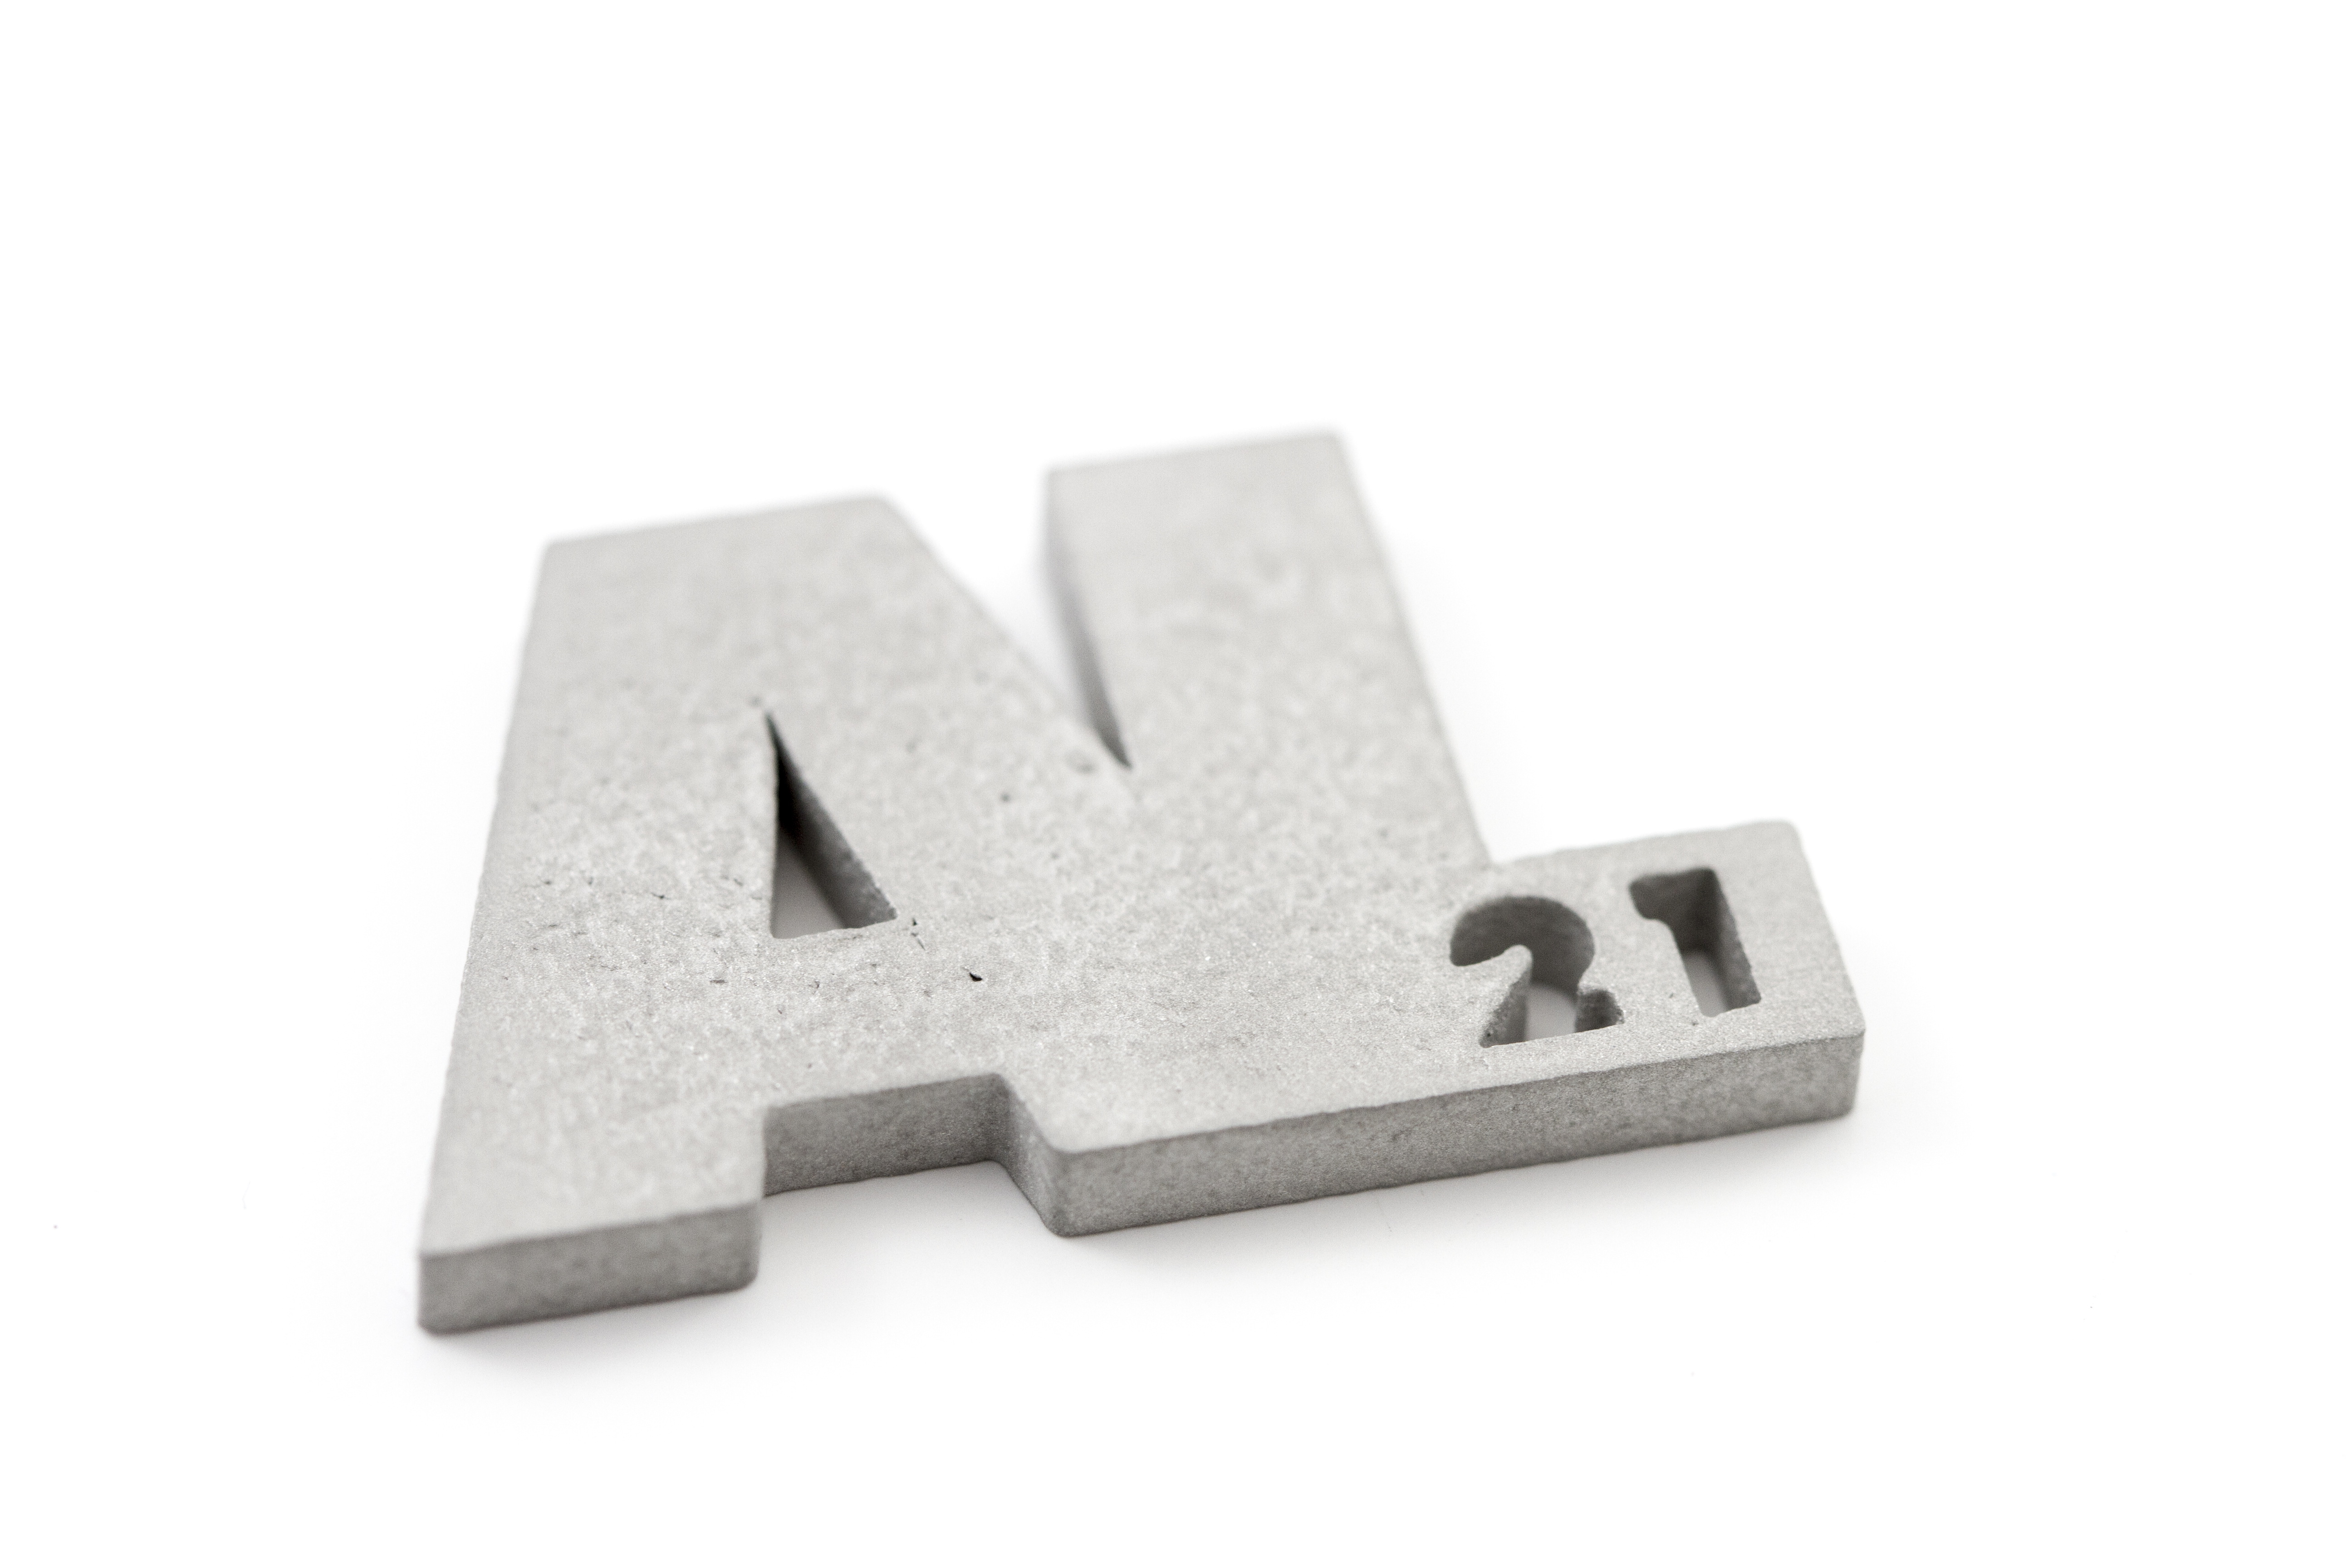 imaterialise aluminum 3d printing sample kit